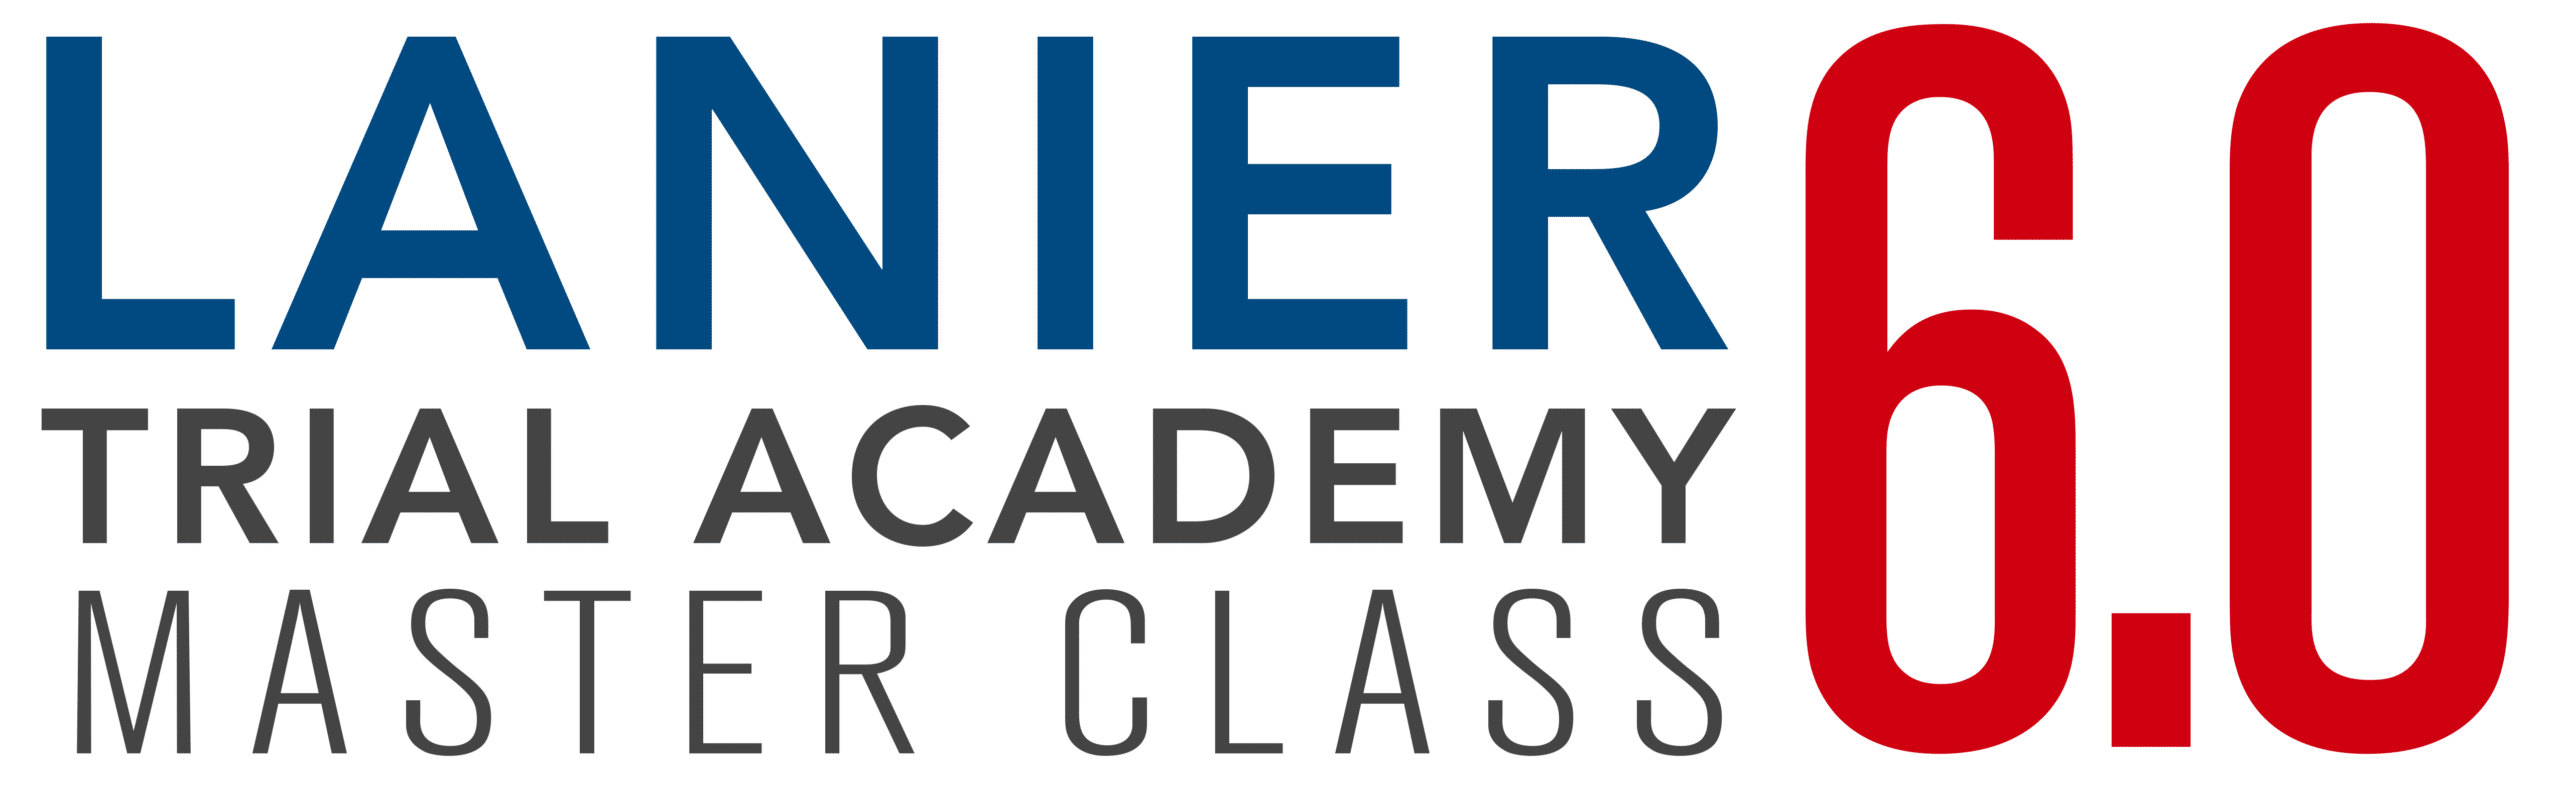 Lanier Trial Academy